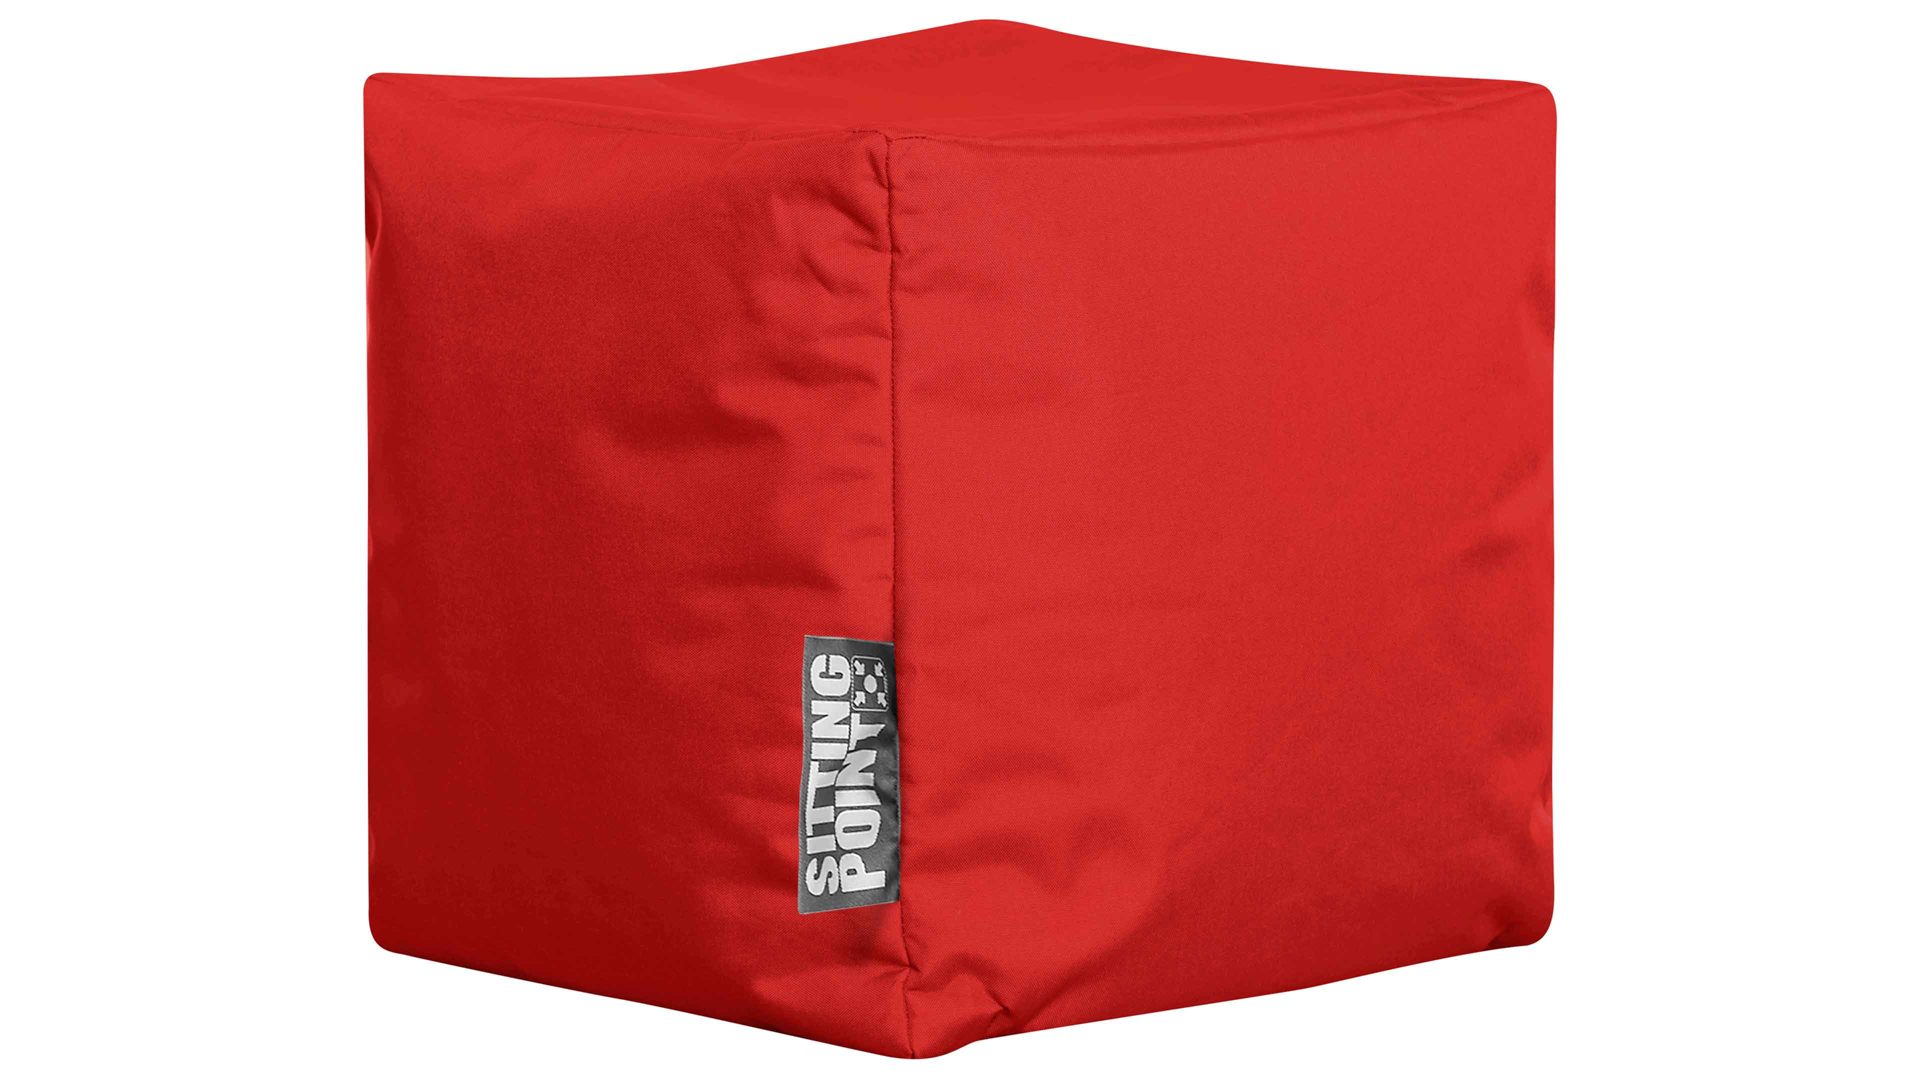 Sitzsack-Würfel Magma sitting point aus Kunstfaser in Rot SITTING POINT Sitzwürfel cube scuba® rote Kunstfaser - ca. 40 x 40 x 40 cm